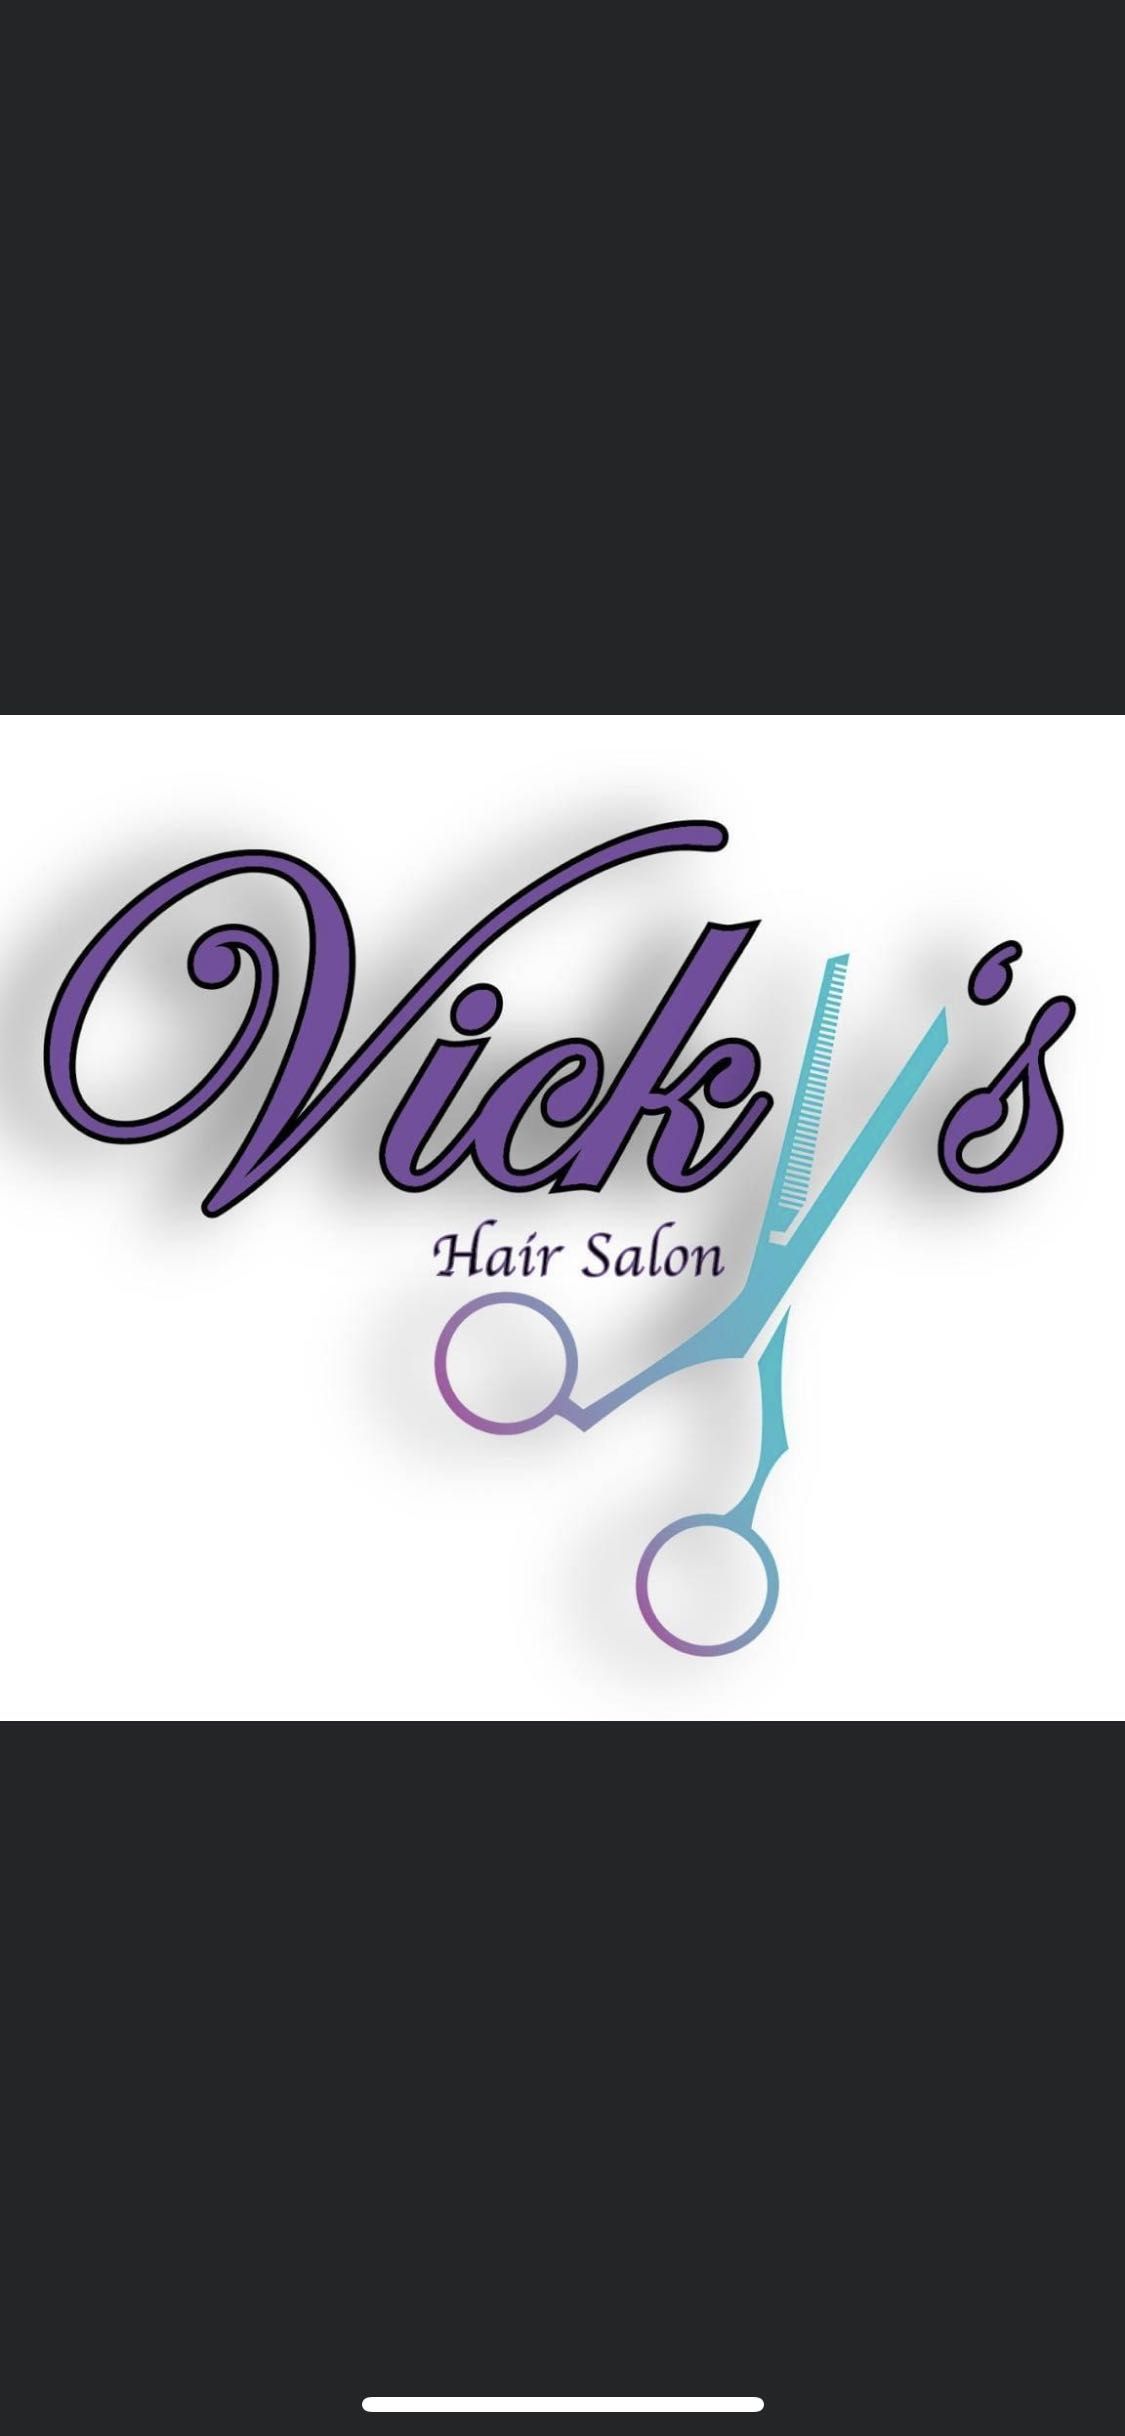 Vicky’s Hair Salon, 11200 Menchaca Rd. Building 4, unit 3, Austin, 78748